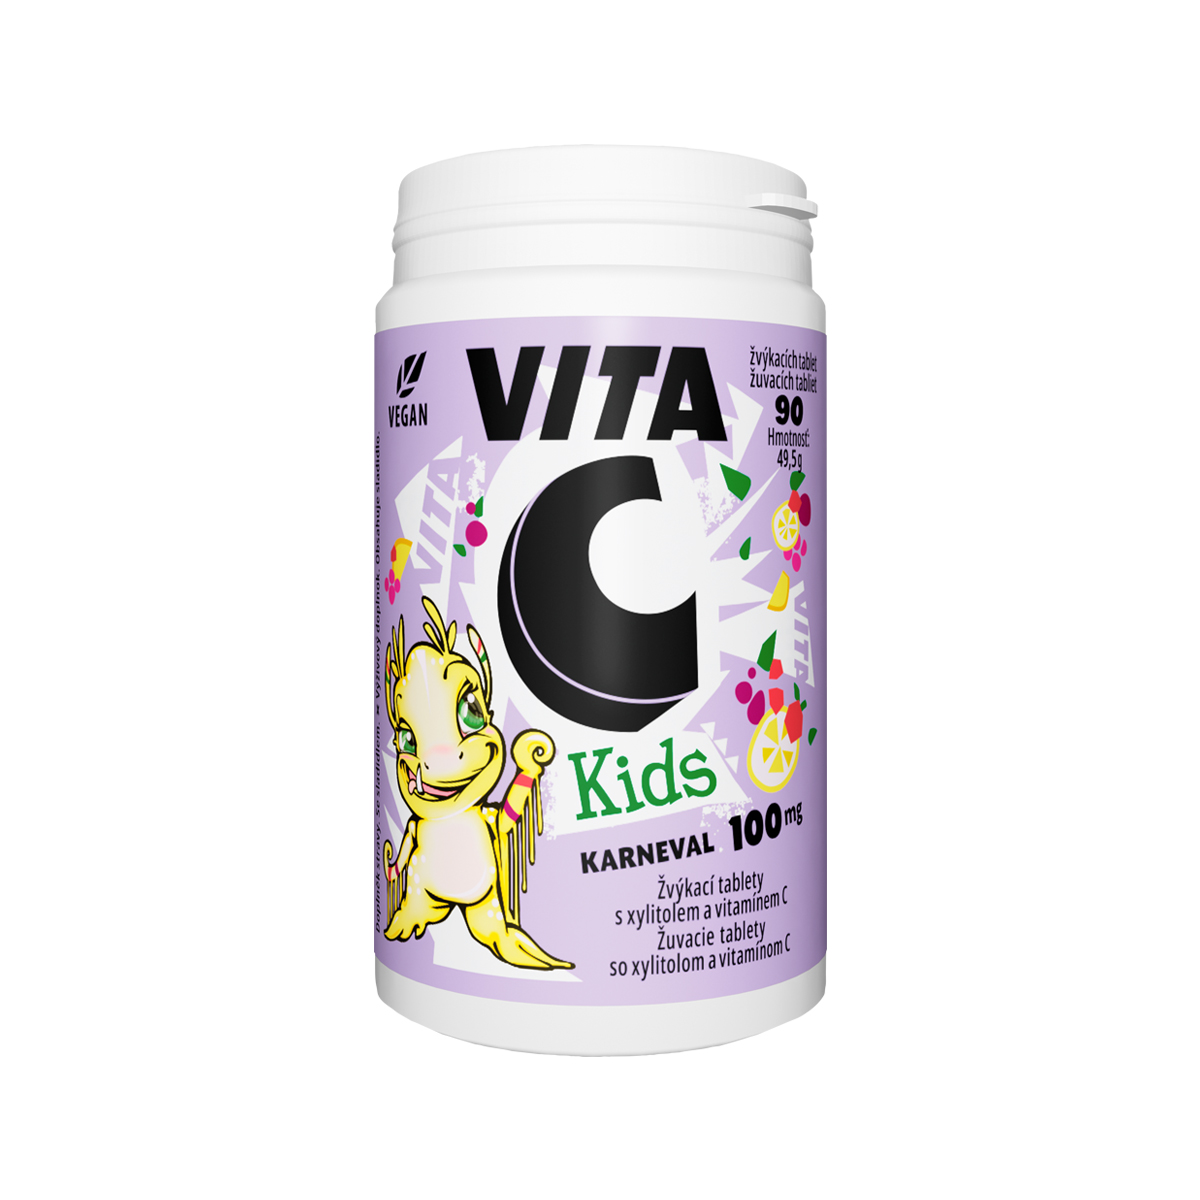 Vitabalans VITA C KIDS 100 MG